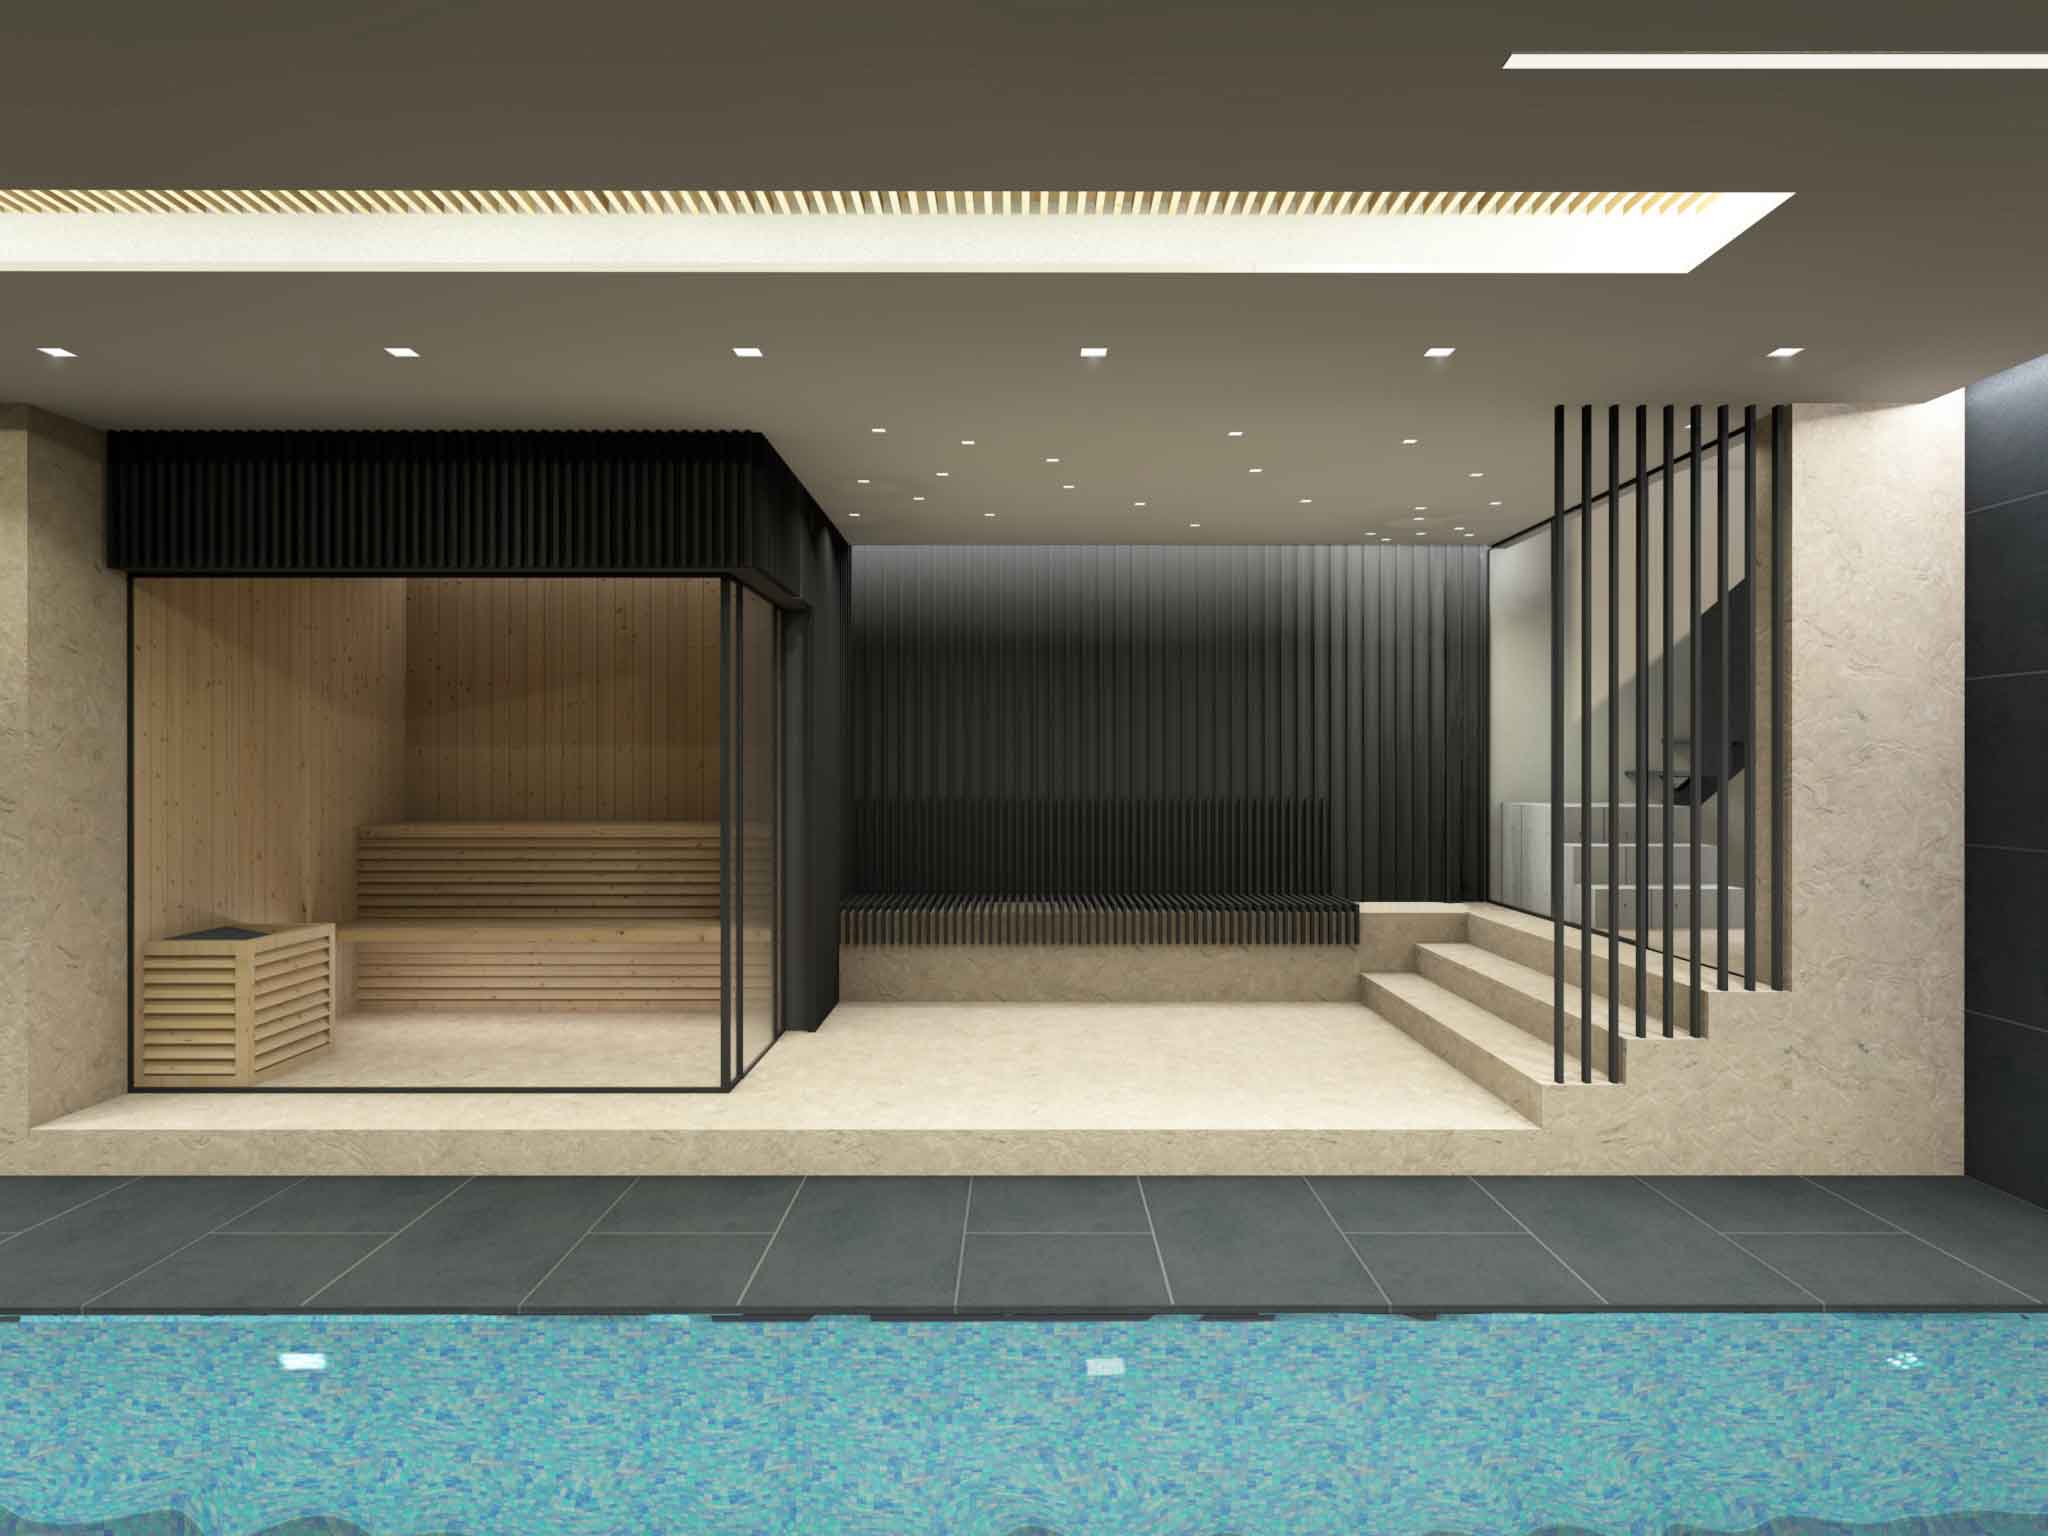 Concept design for an 18 metre long pool